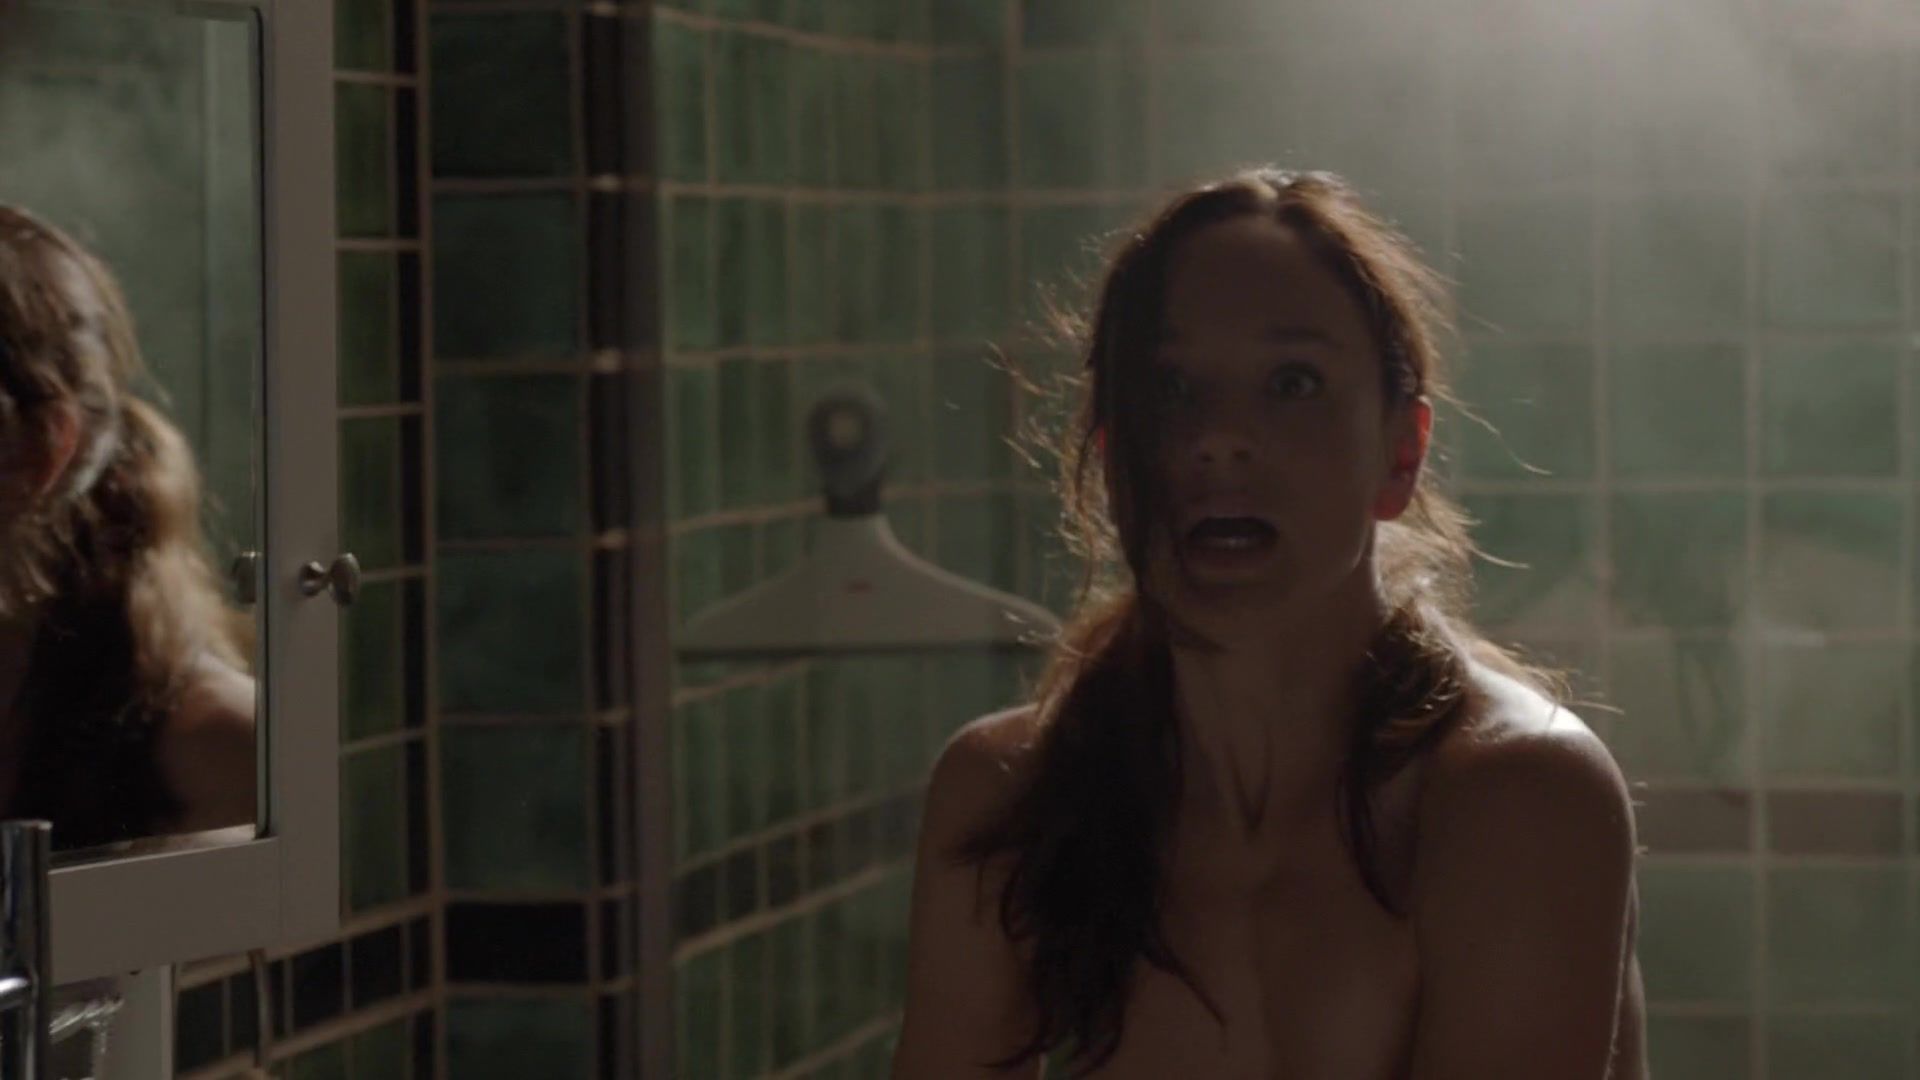 Twinkstudios Naked Sarah Wayne Callies in Sex Scene from the TV show "Colony" s01e03 (2016) MetArt